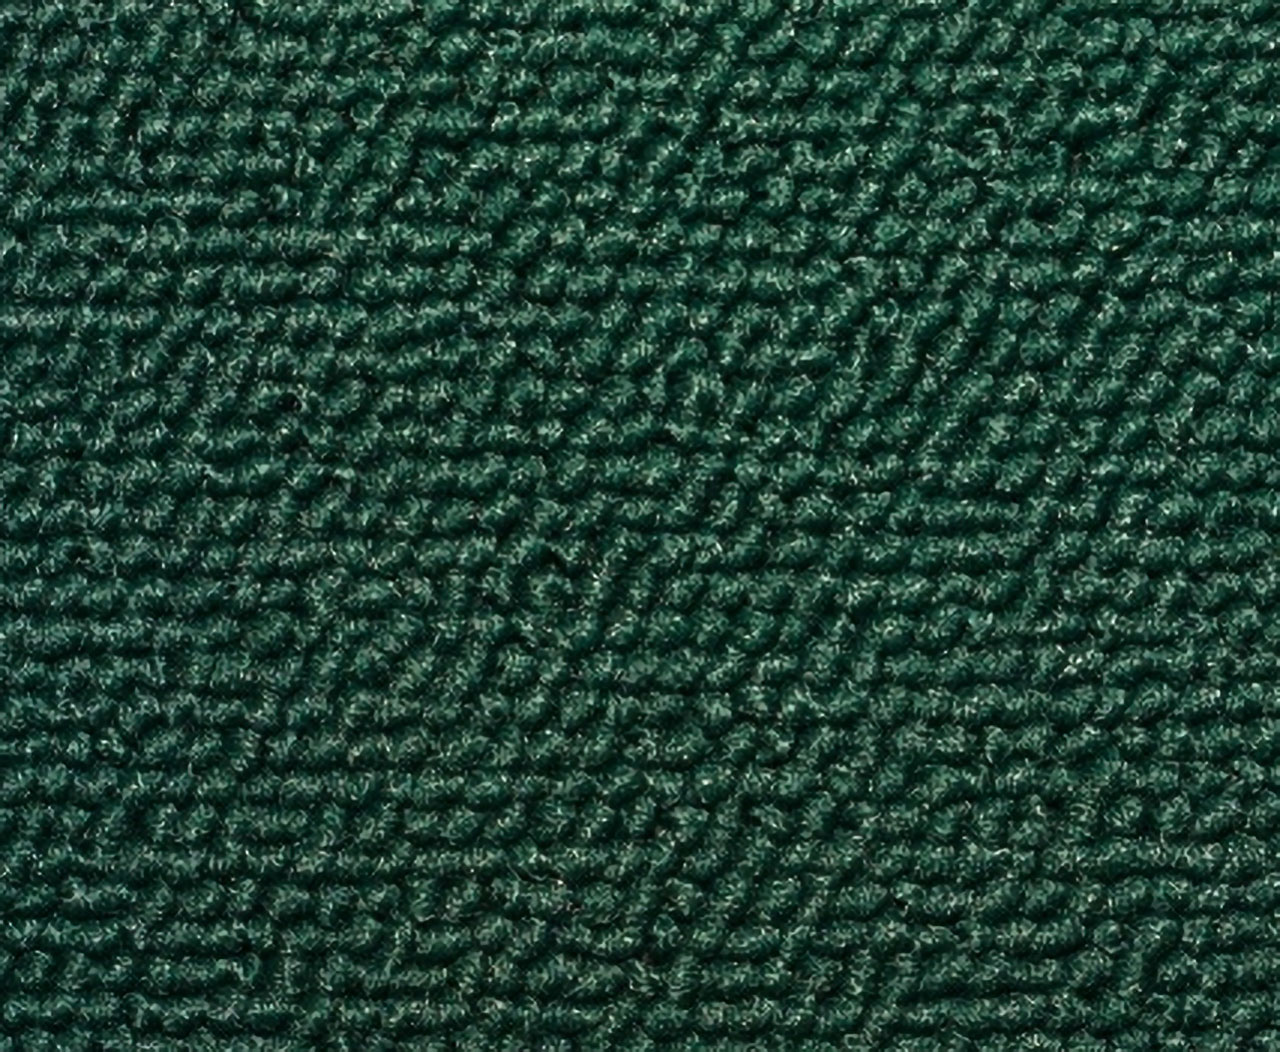 Holden Standard EH Standard Sedan C20 Palais Green Carpet (Image 1 of 1)